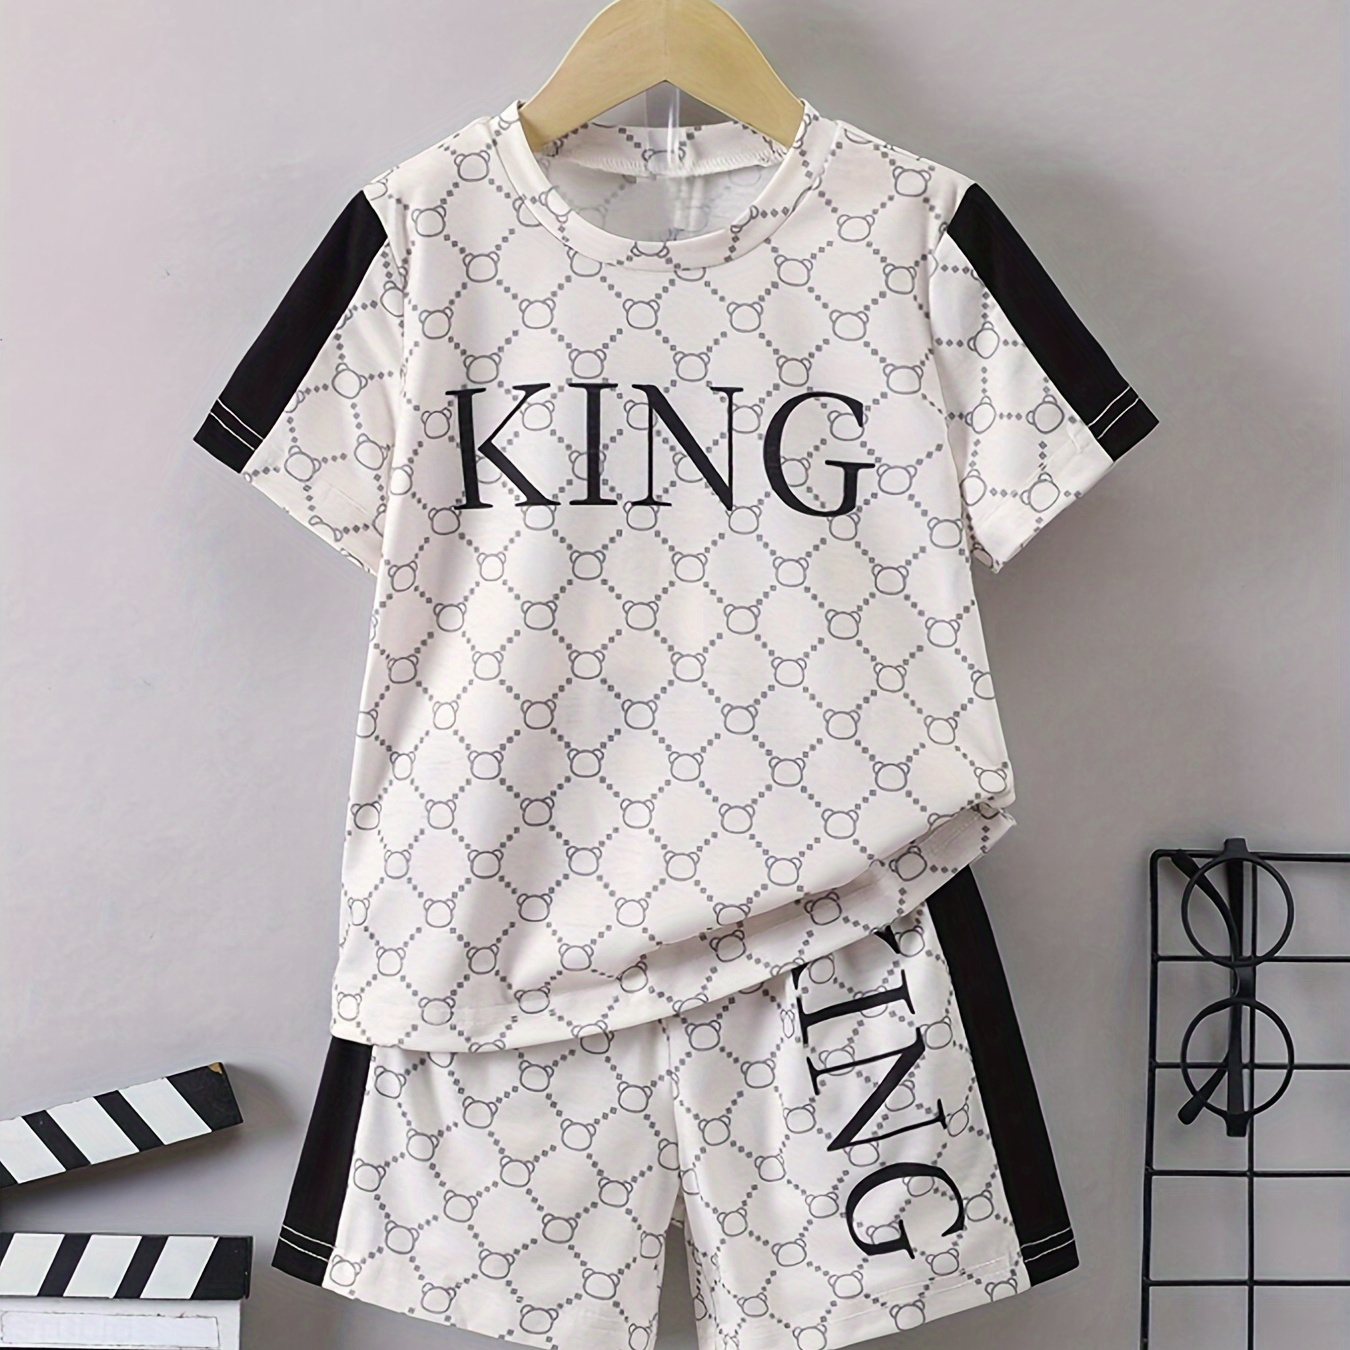 

2pcs Boys Summer Loungewear Set – King Letter Print Short Sleeve Crew Neck Top & Short Set, Cool Pattern Comfy Pj Set, Kids' Cozy Sleepwear Outfit